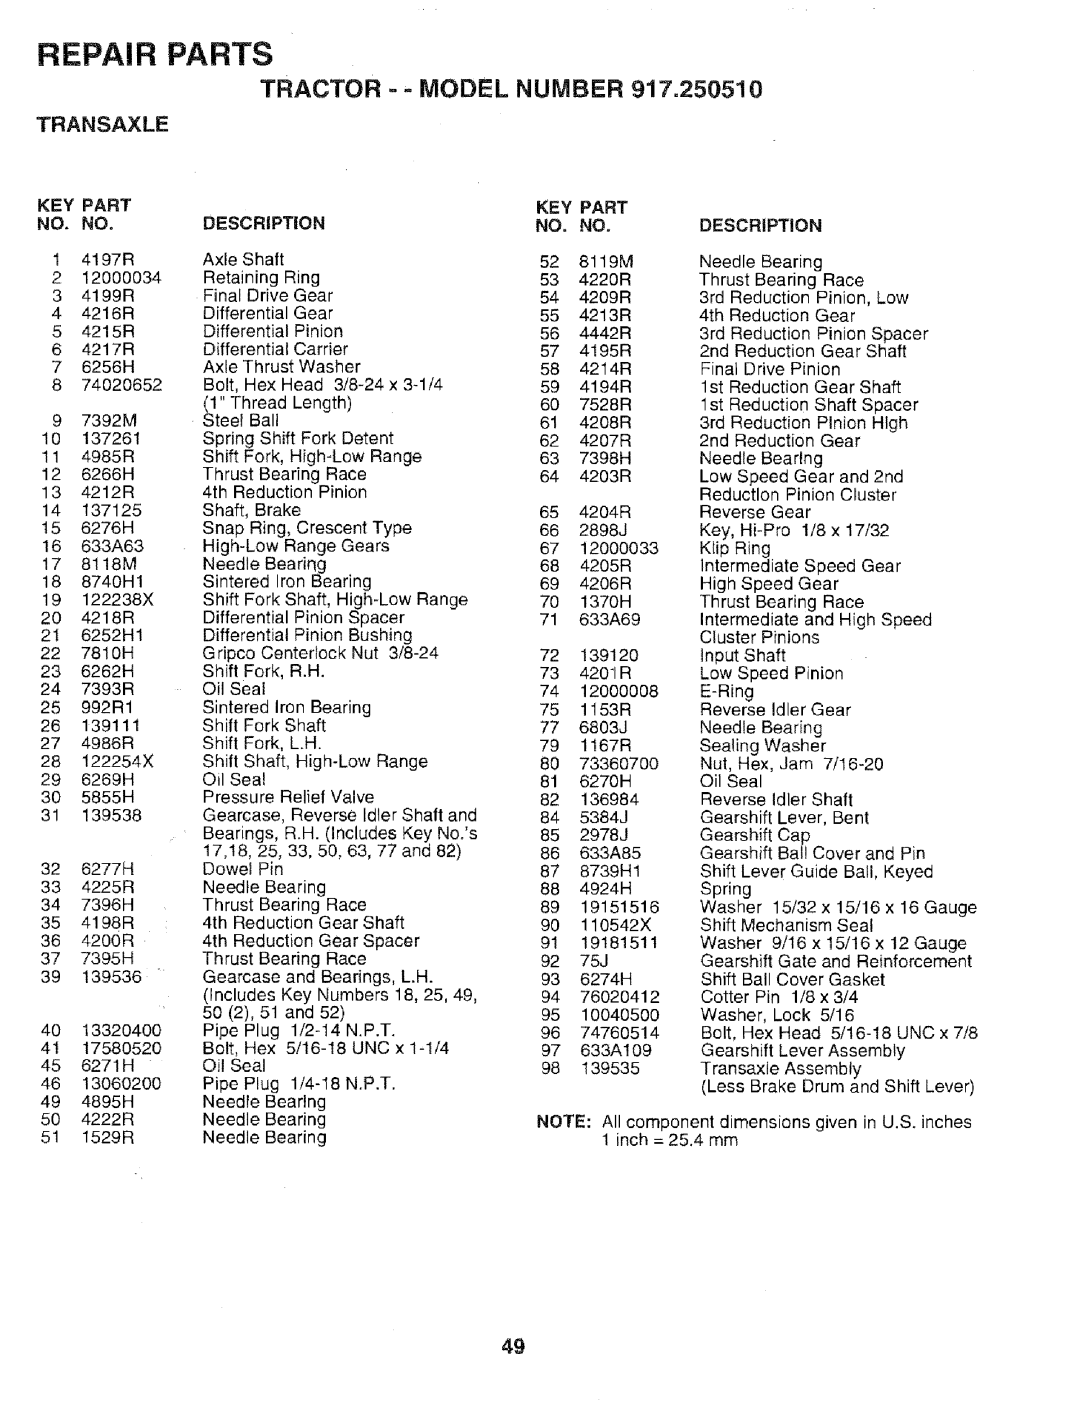 Sears 917.25051 manual TRACTOR o .- MODEL NUMBER 917=250510, Repair Parts, Transaxle, Key Part 